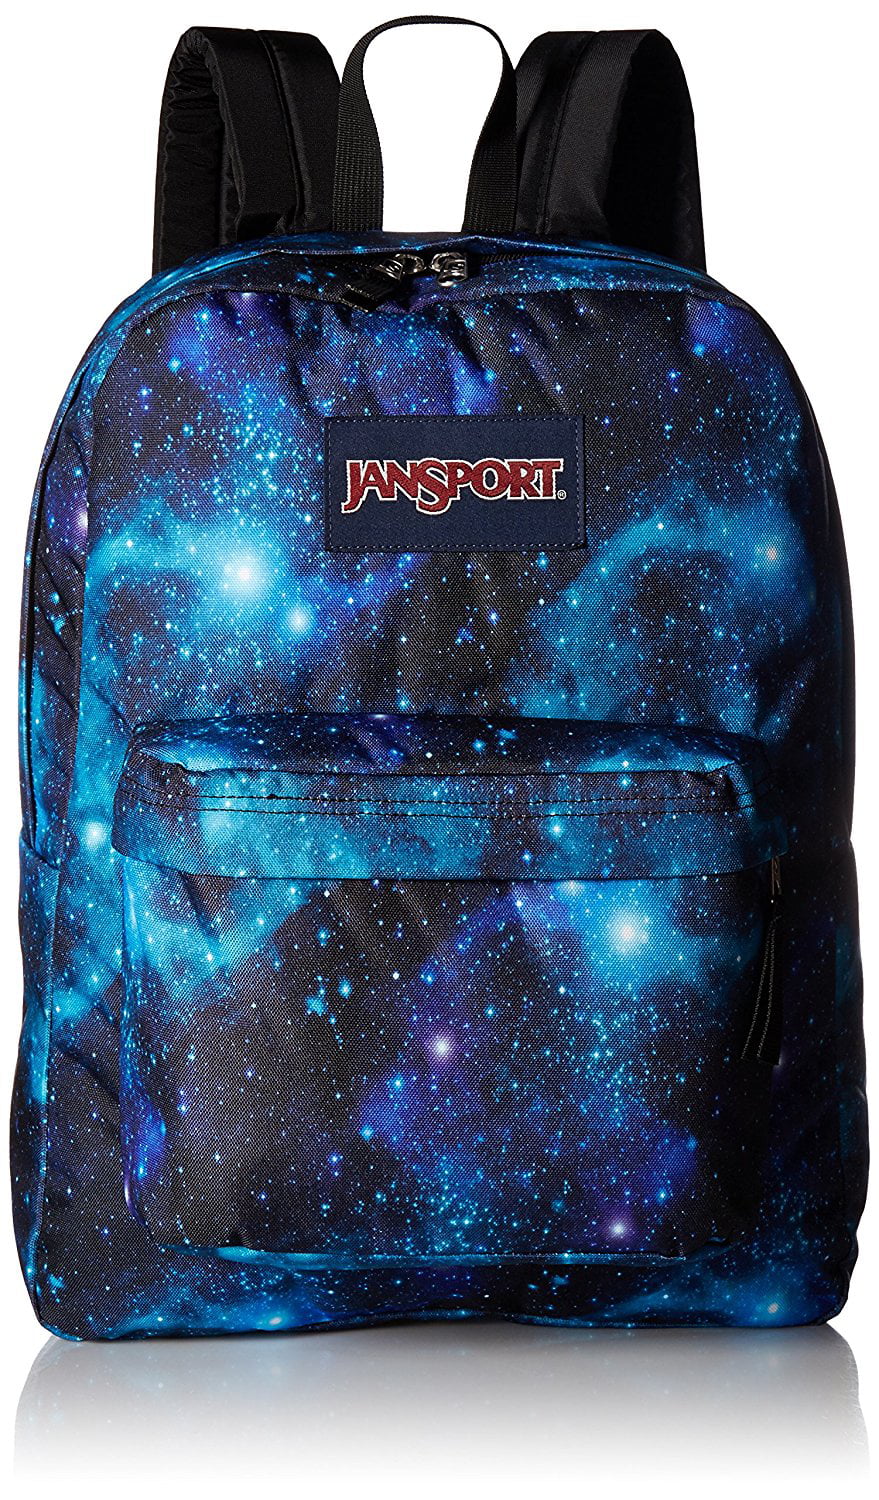 jansport bag galaxy design